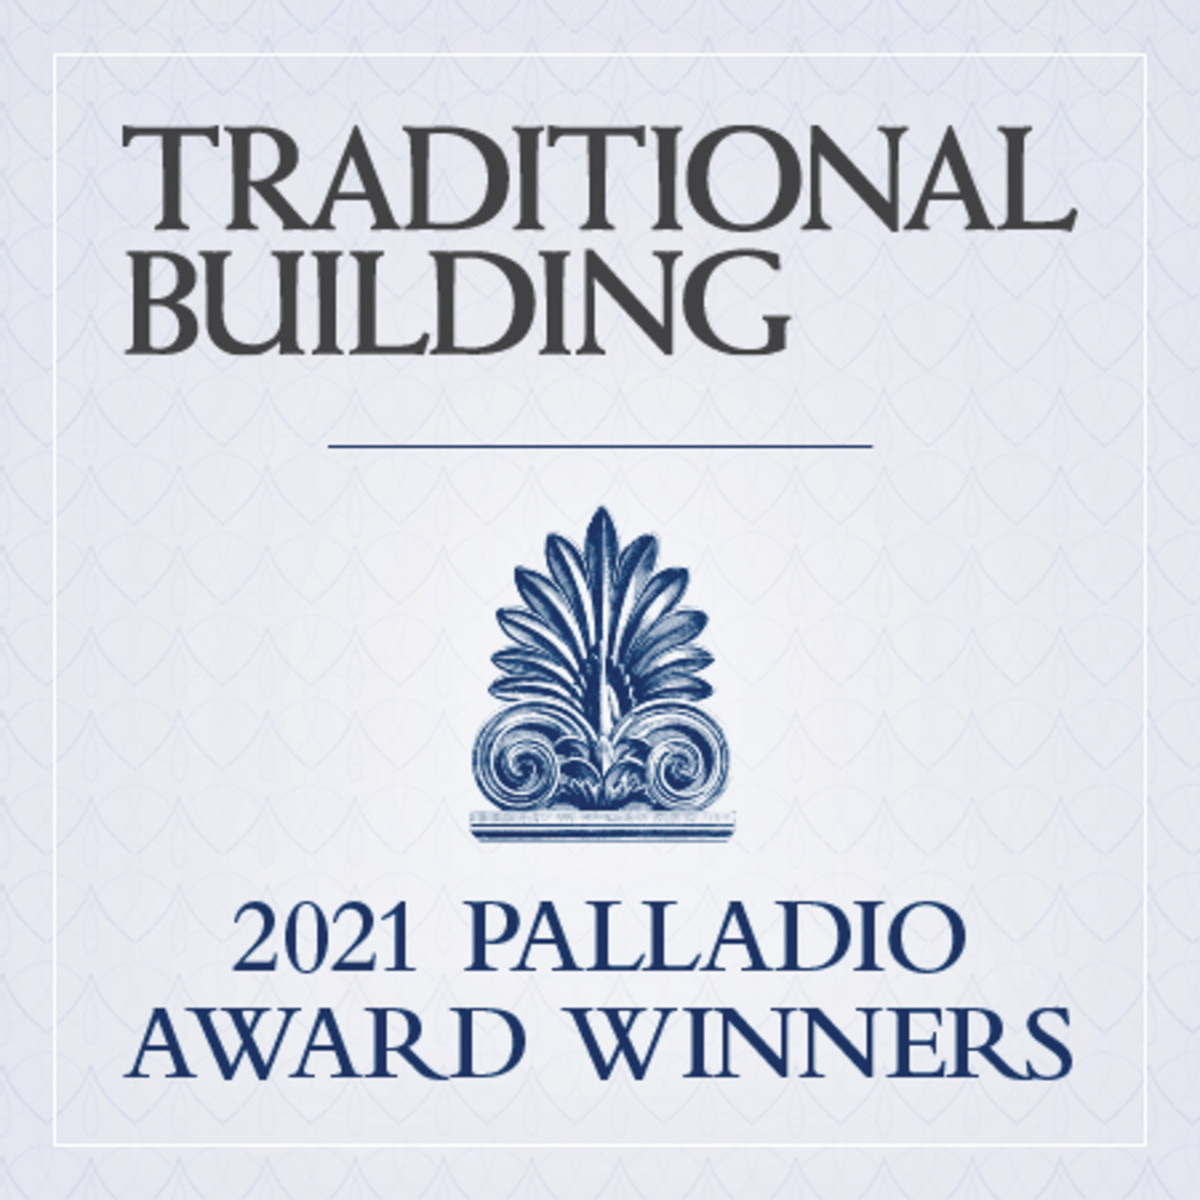 2021 Palladio Award winners